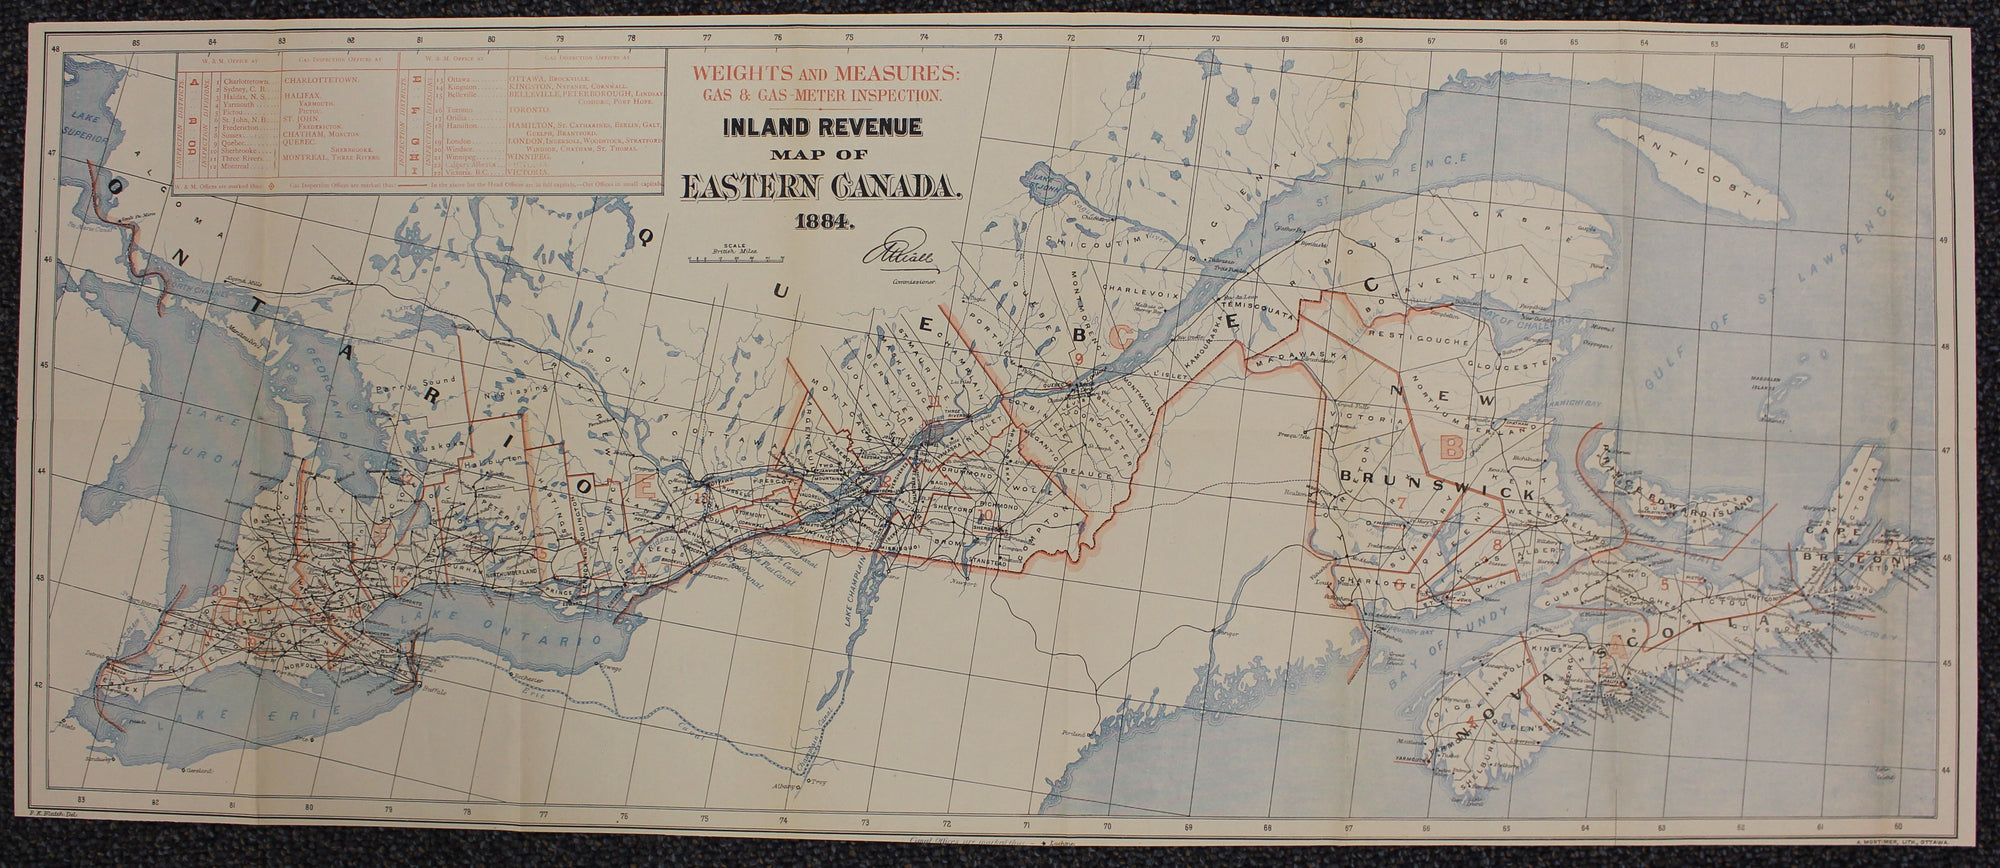 0000WM2010 - FWM & FG - Eastern Canada Inspection Districts Map, 1884